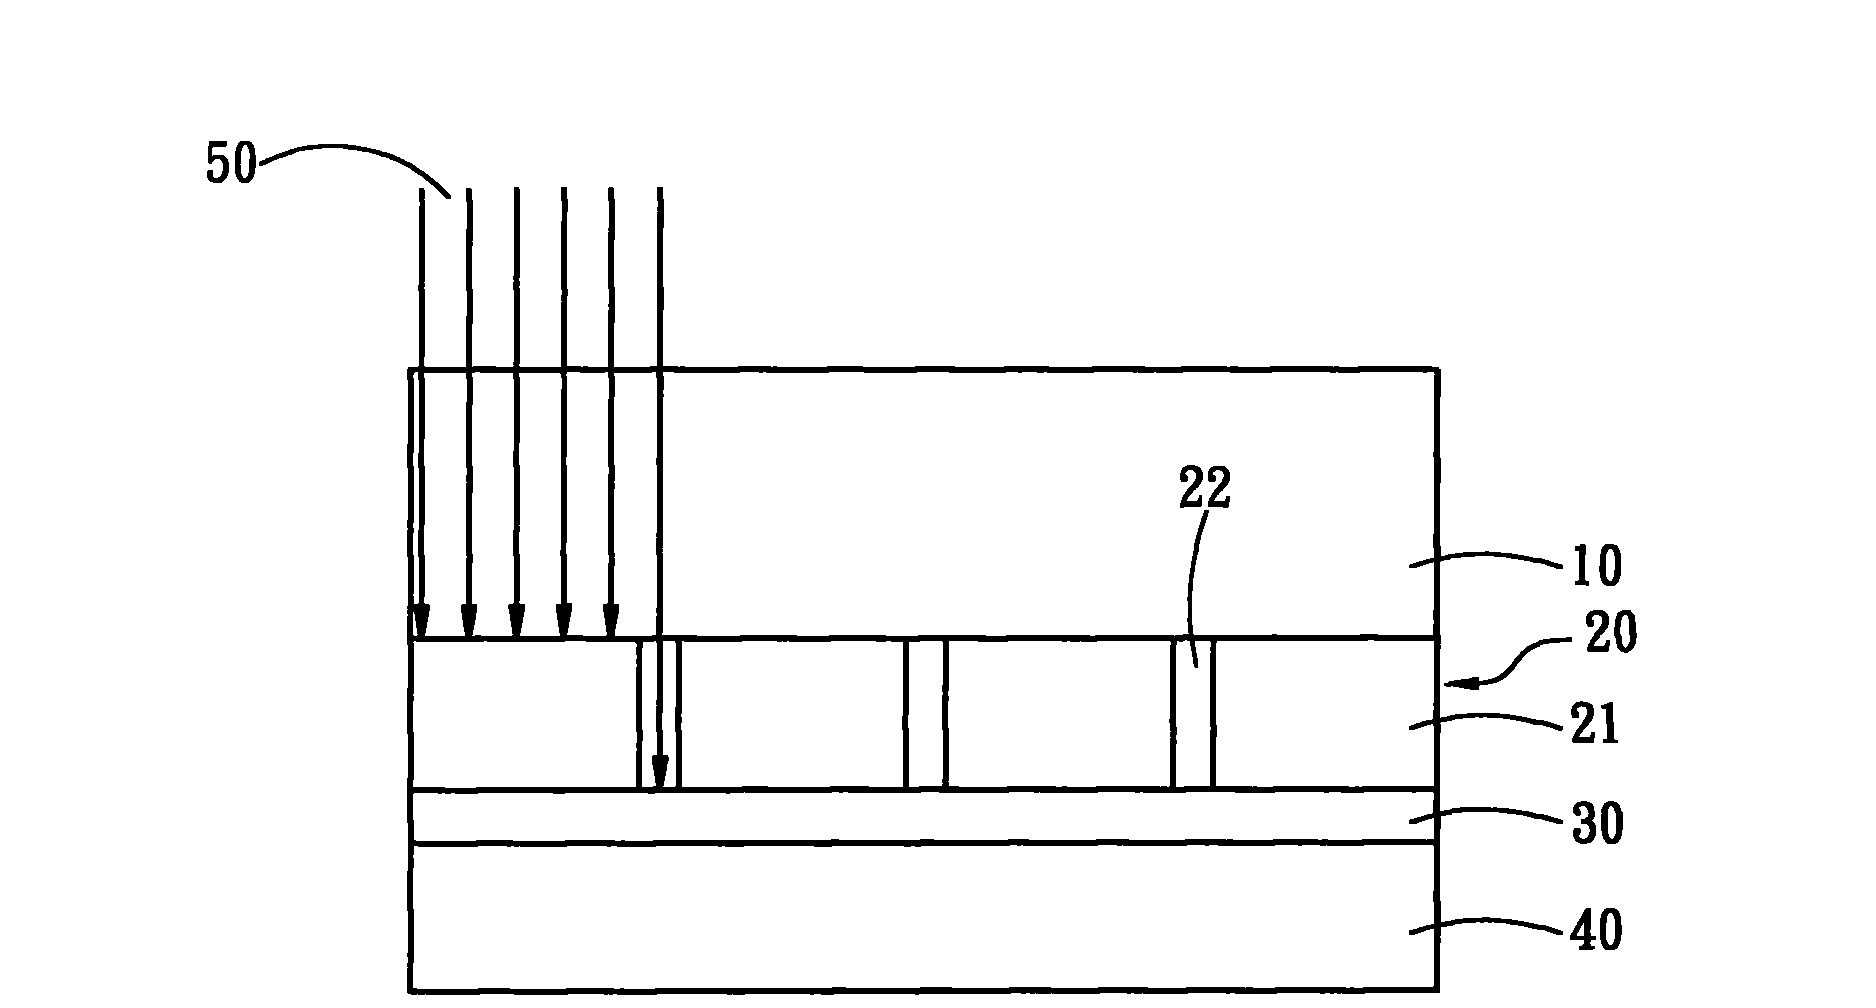 Method of laser lift-off for light-emitting diode